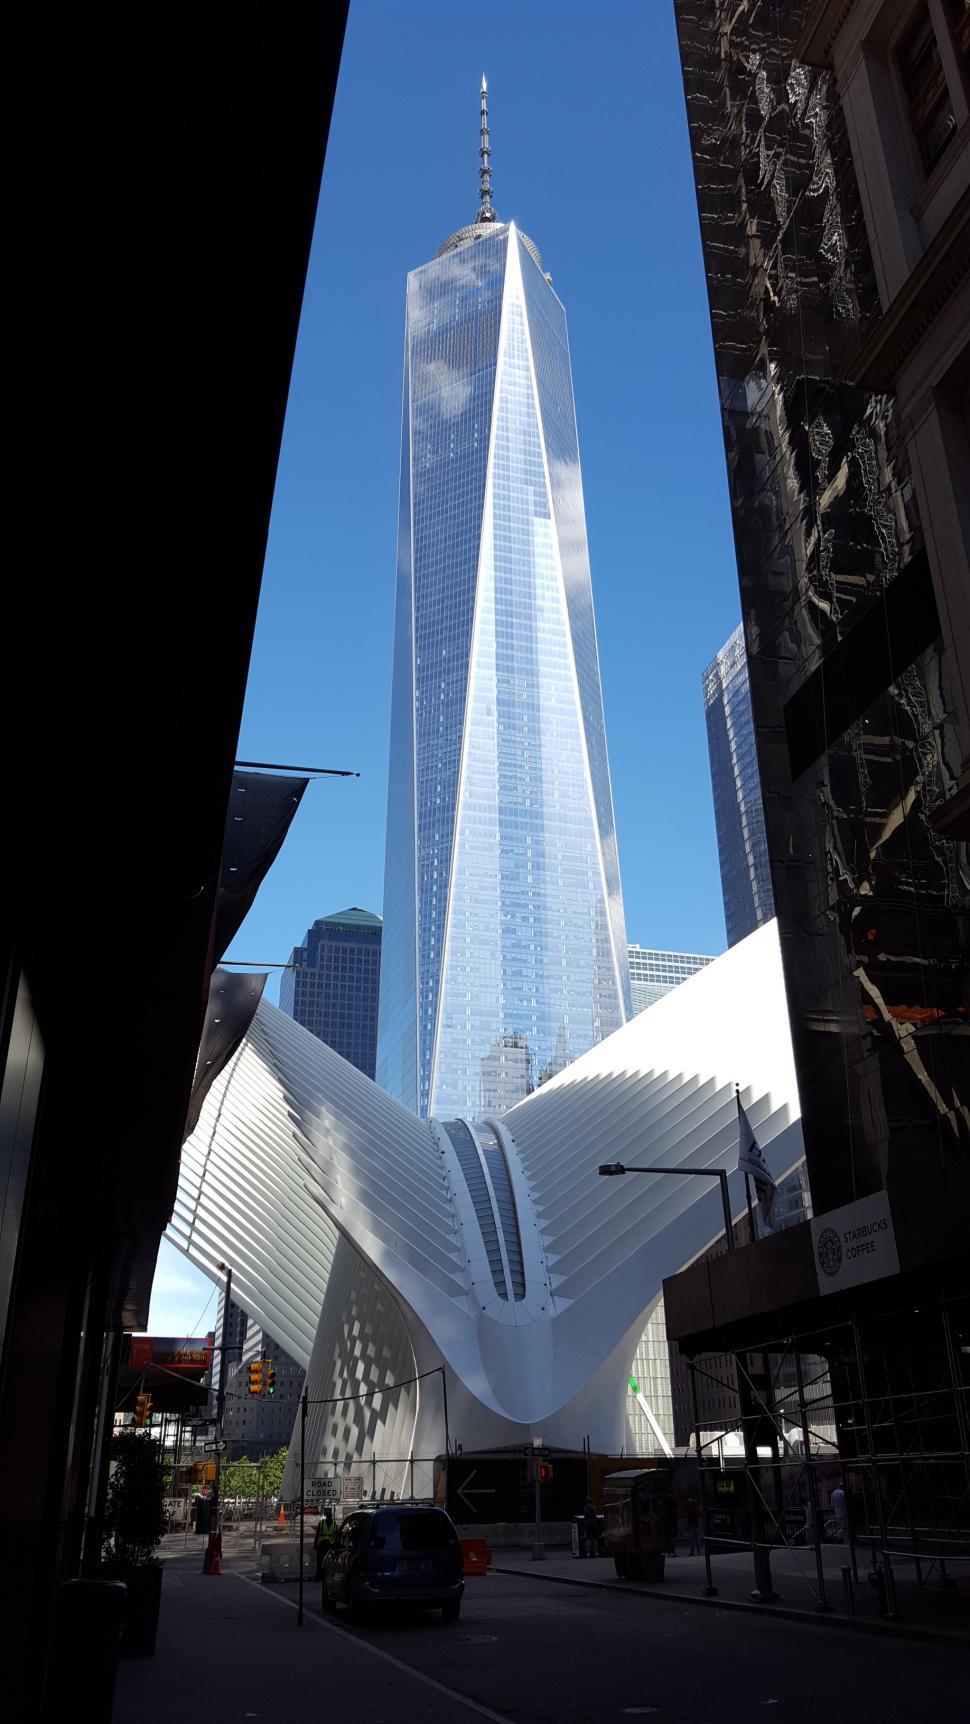 Free Image of One World Trade Center and World Trade Center Transportation Hub 